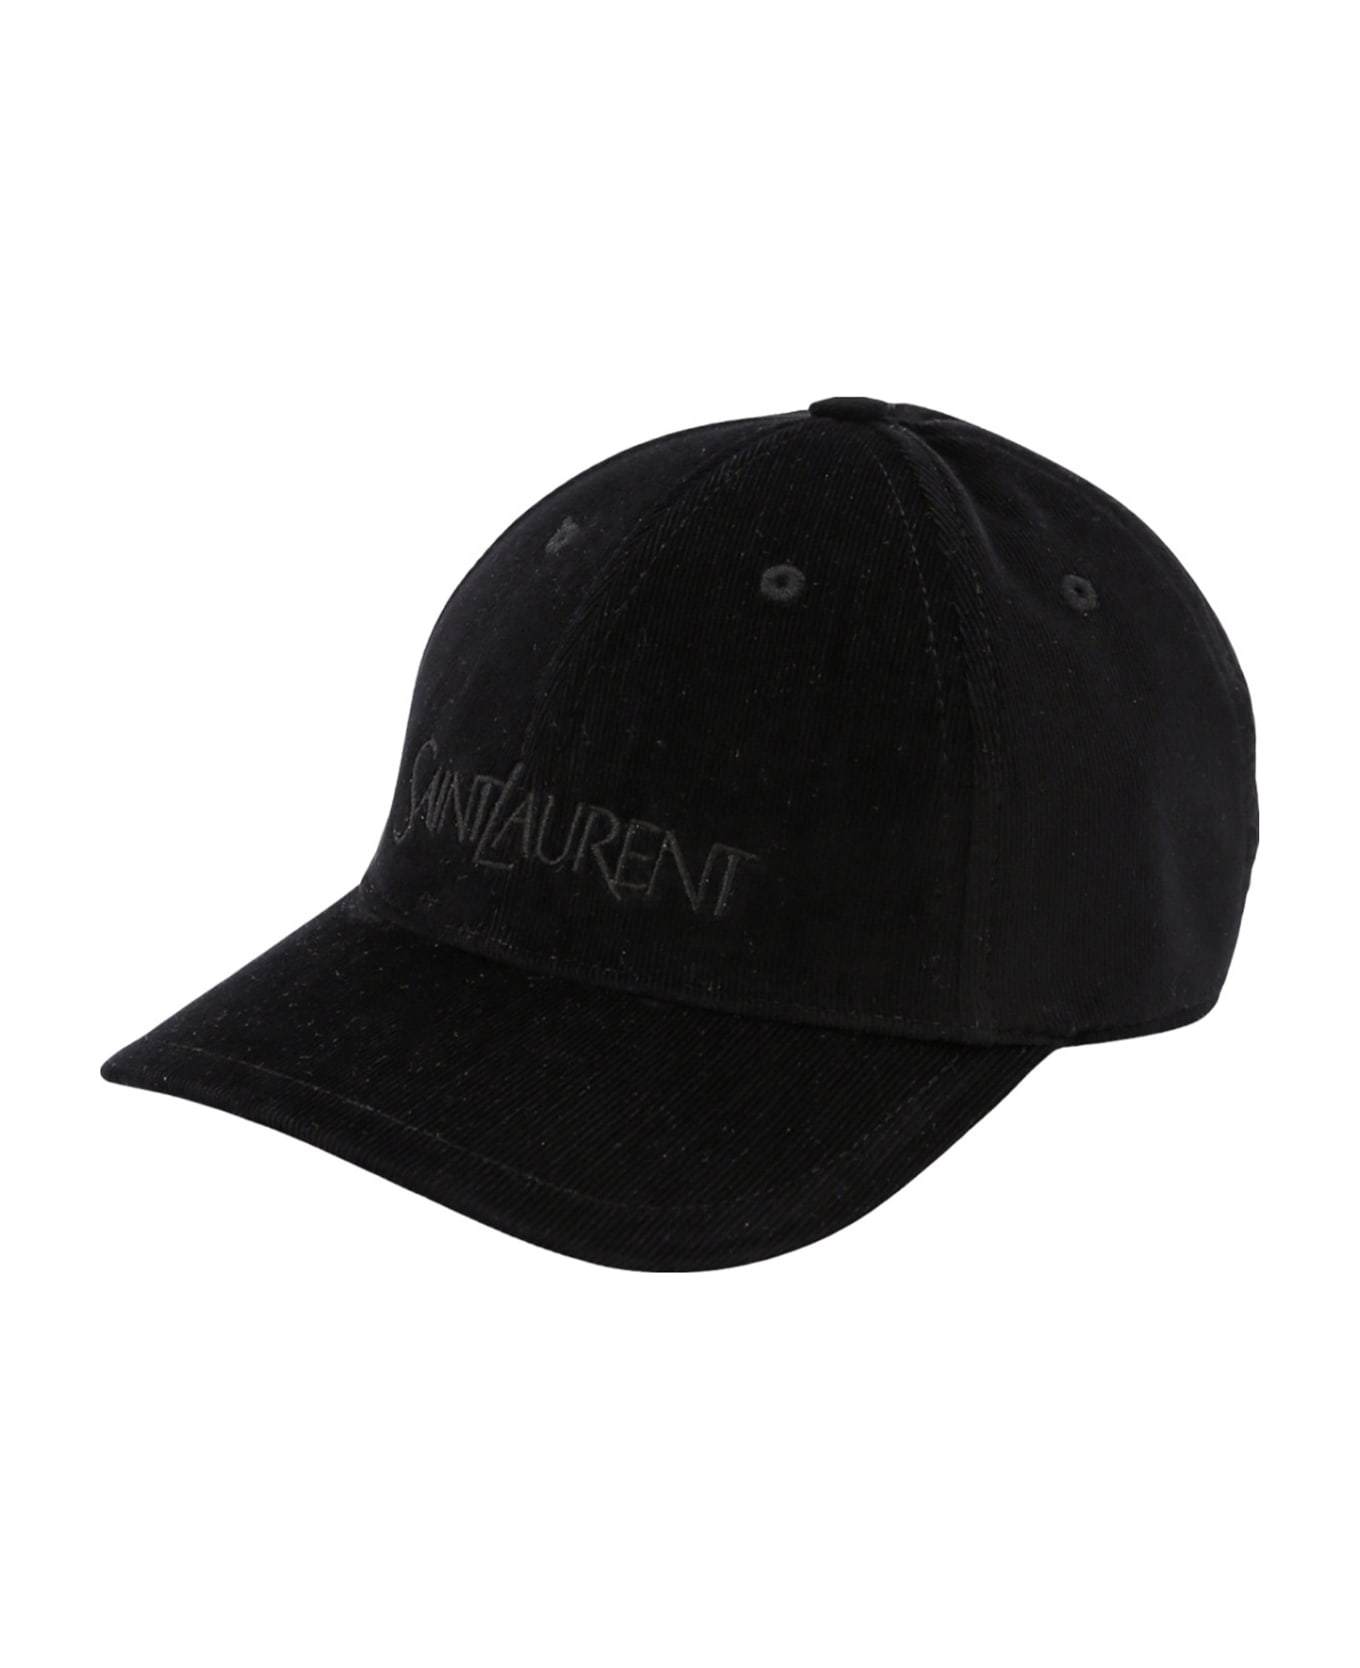 Saint Laurent Vintage Baseball Cap - Black 帽子